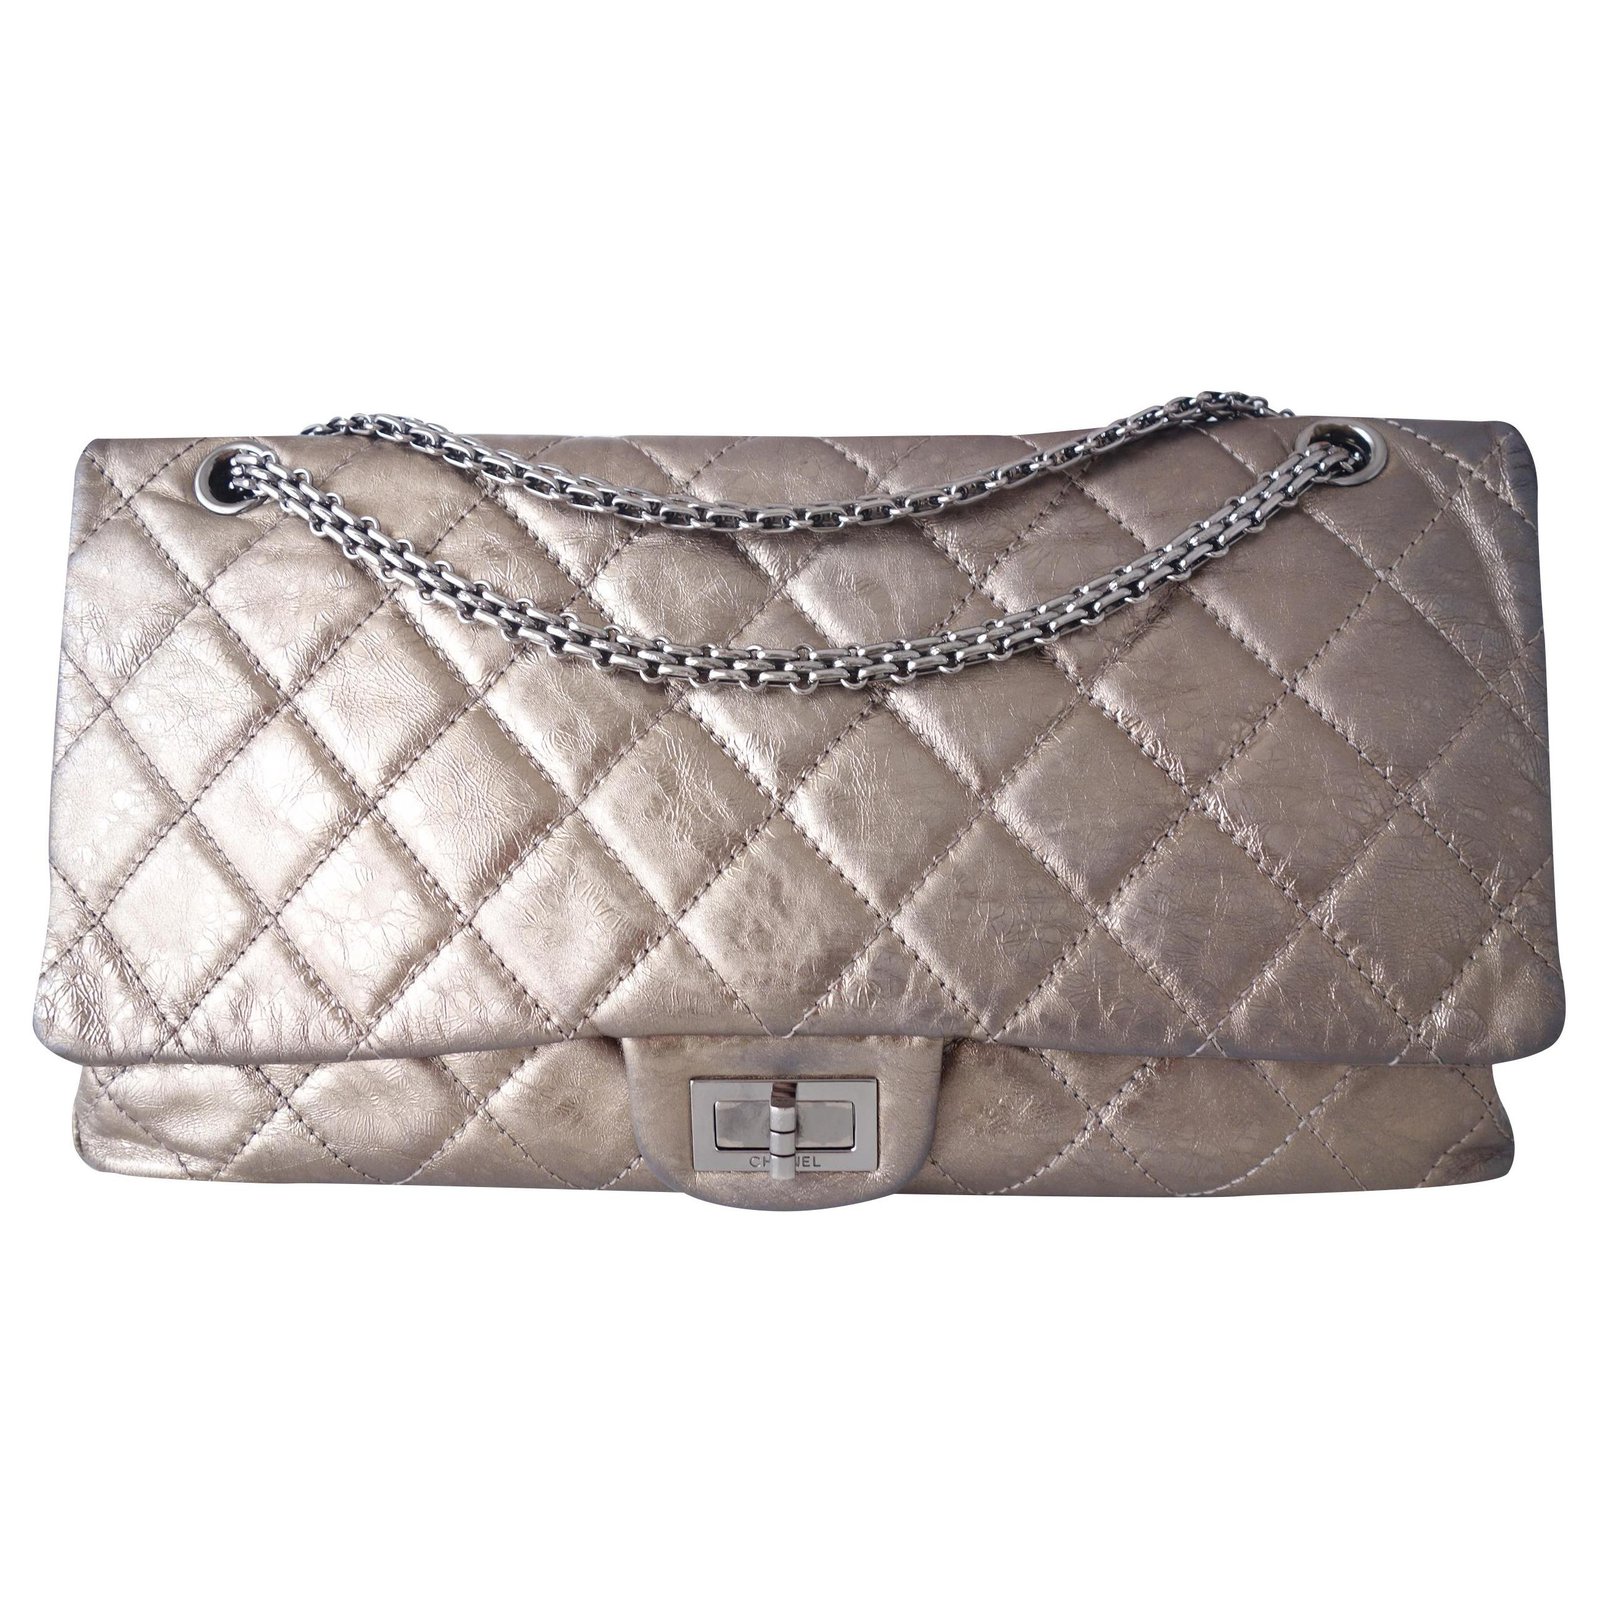 Chanel Chanel Bag 2 55 Maxi Handbags Leather Golden Ref Joli Closet